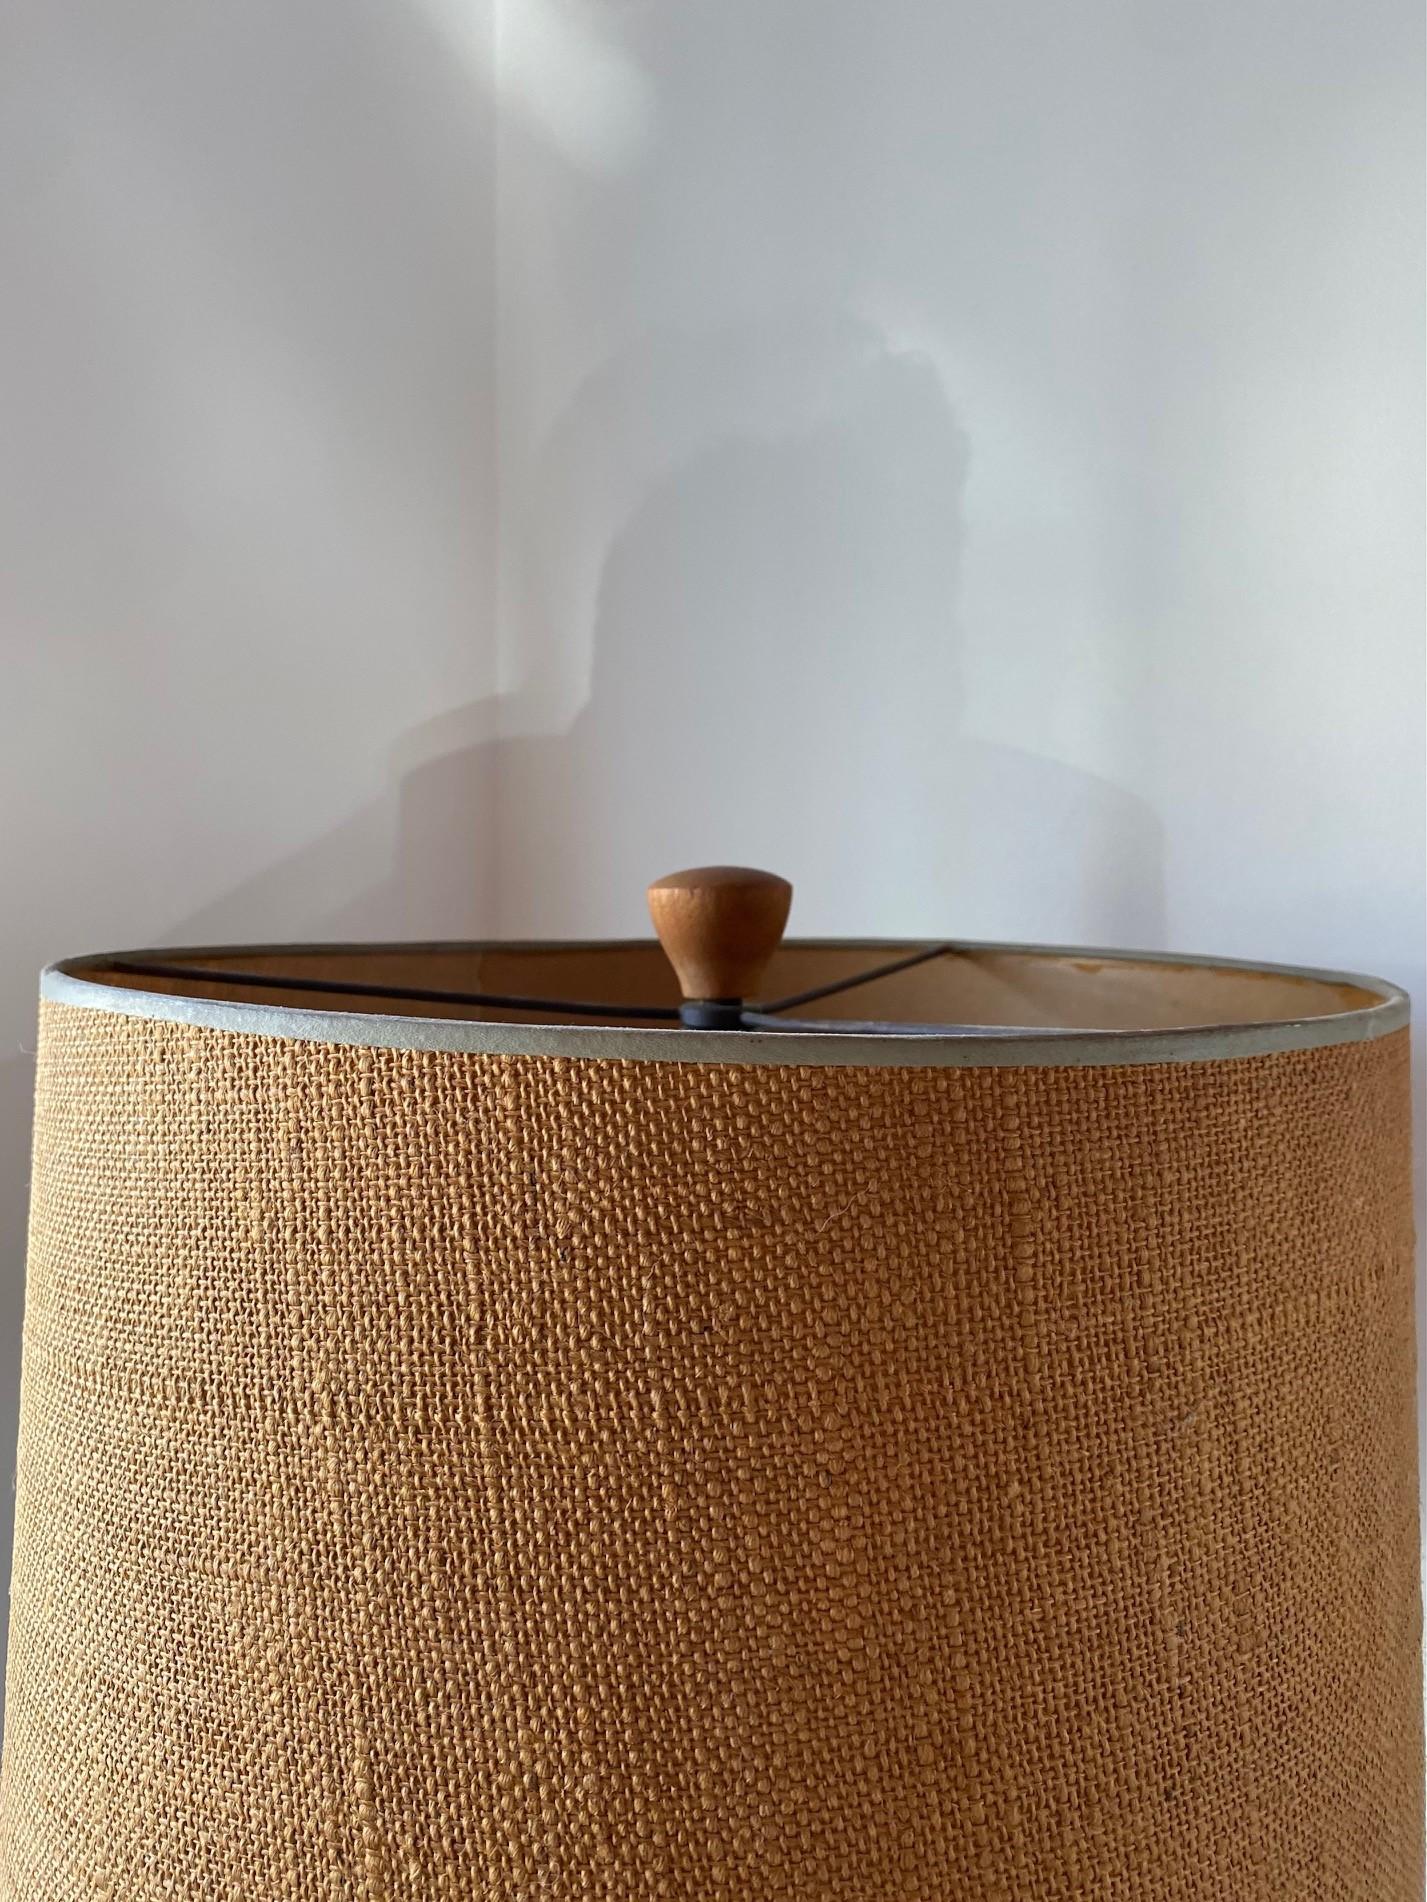 American Martz M-101 Earth Tone Glazed Teardrop Table Lamp by Marshall Studios Inc